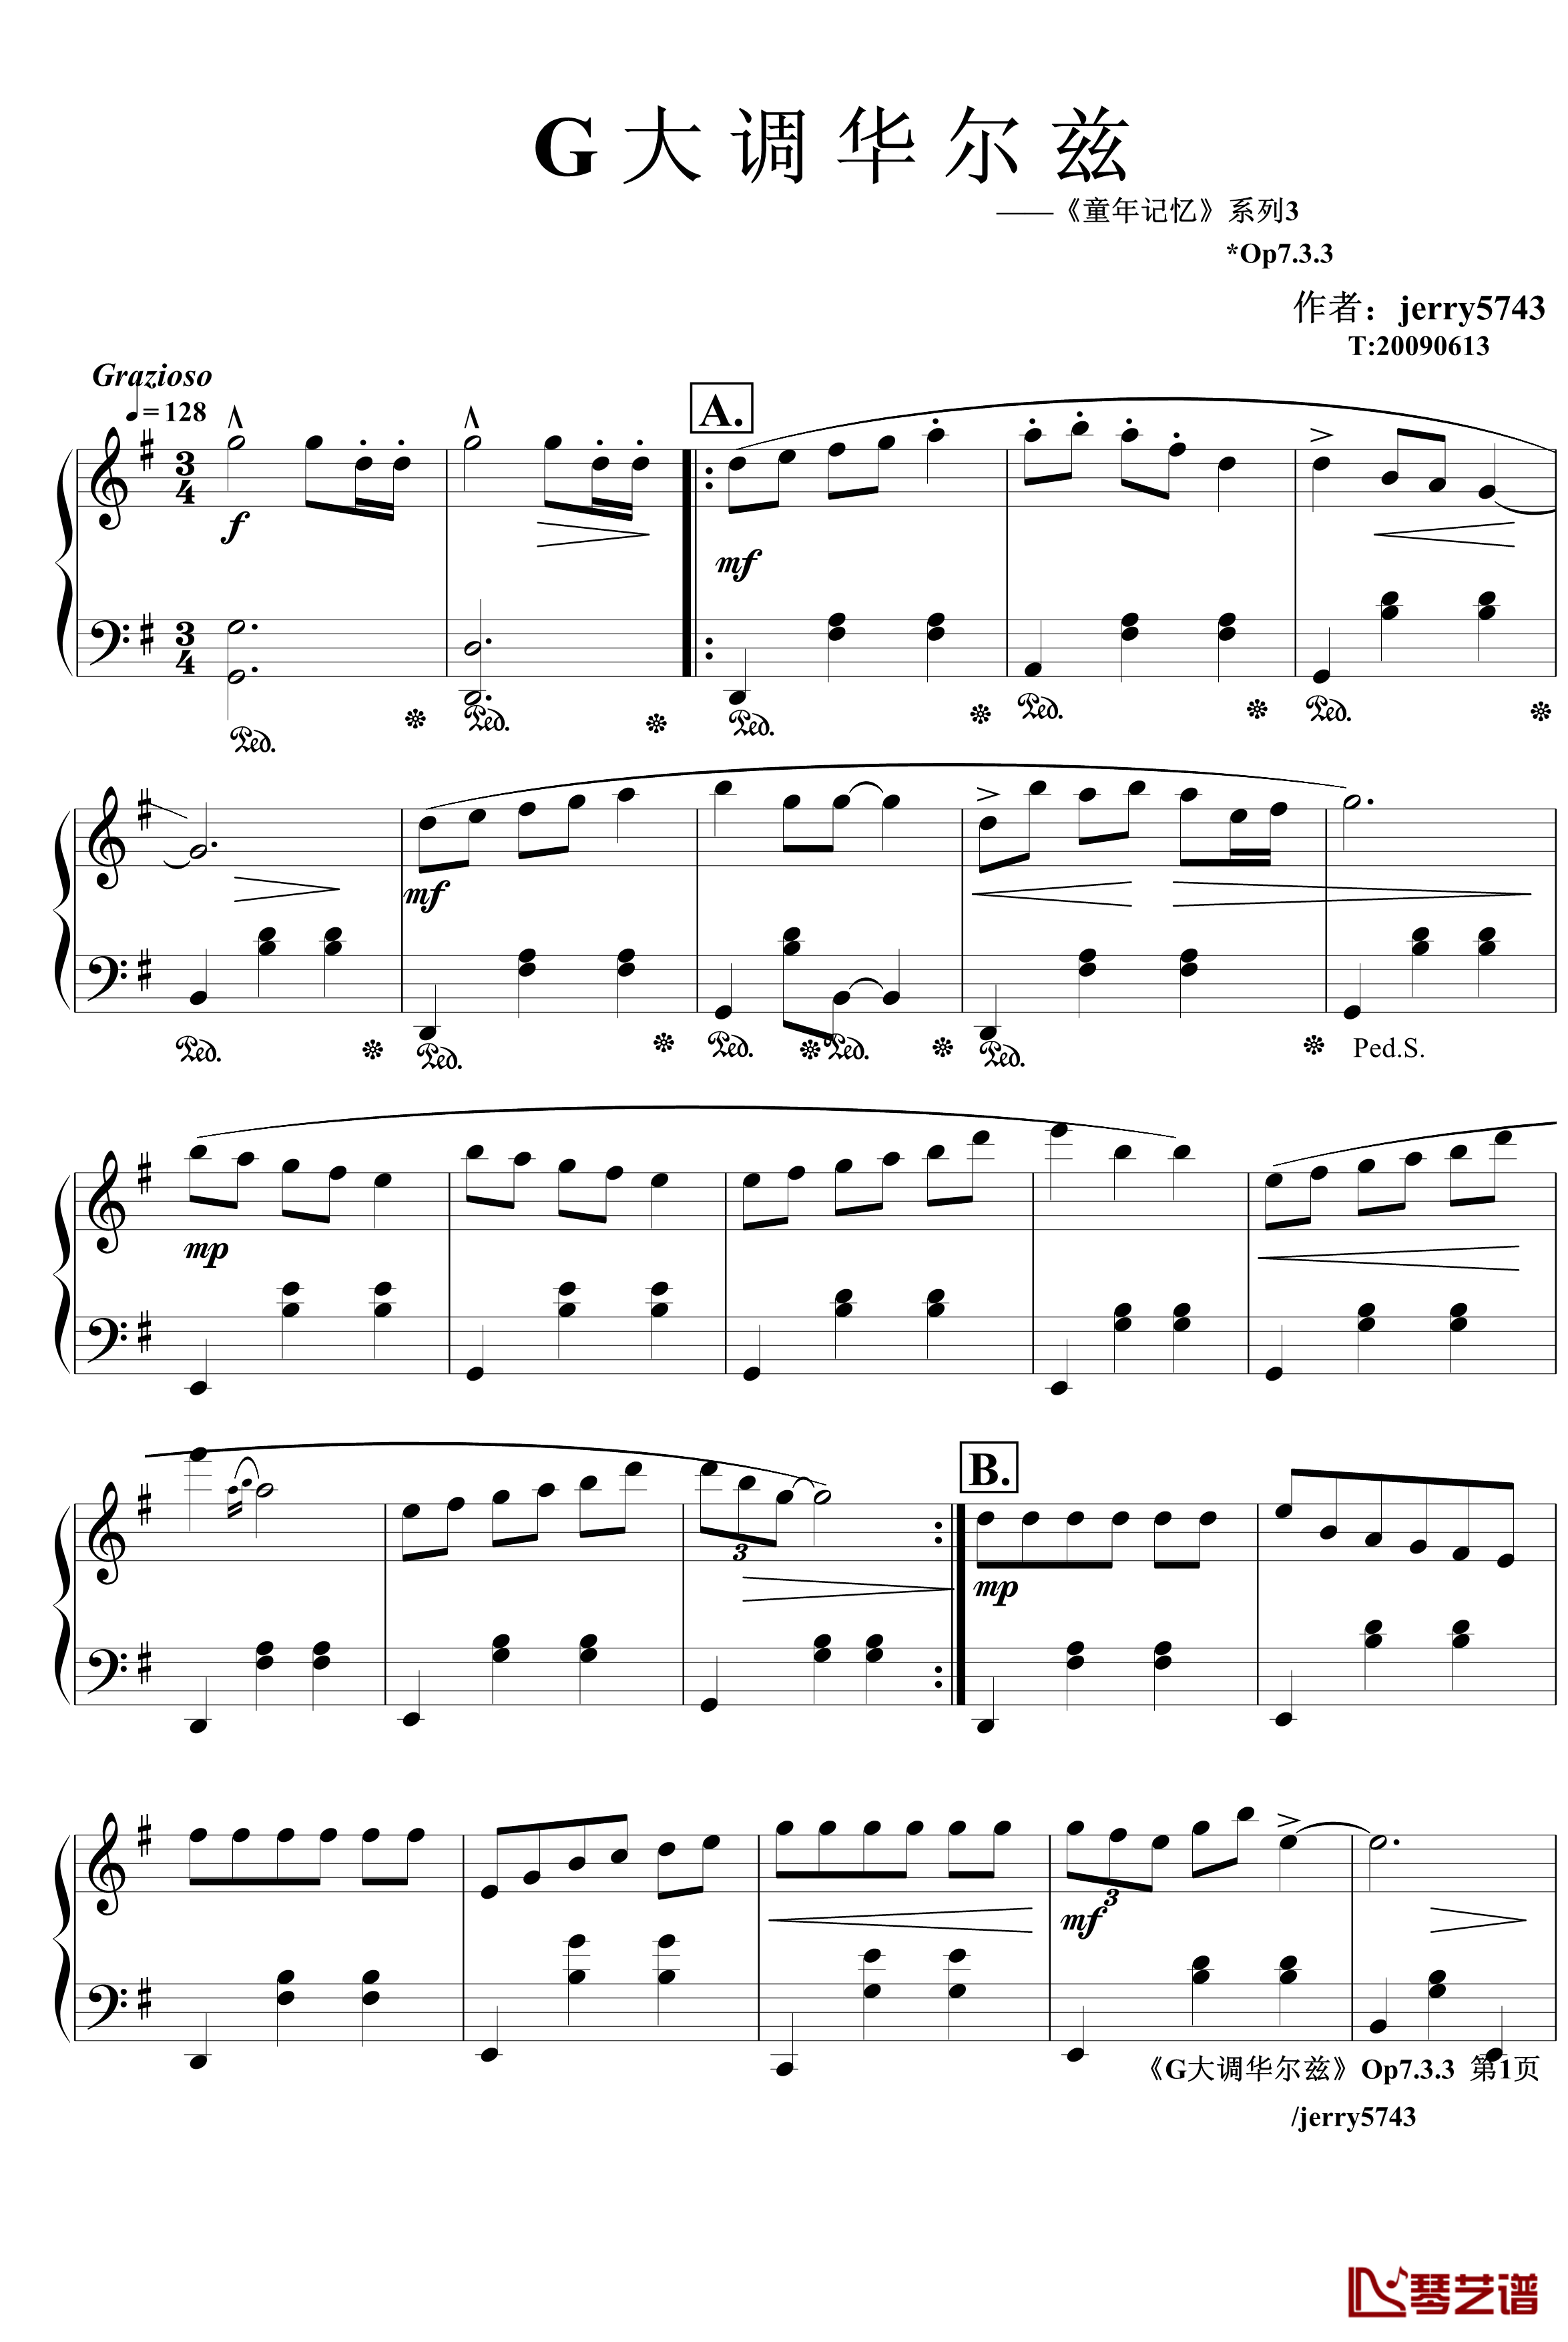 G大调华尔兹Op7.3.3钢琴谱-jerry57431